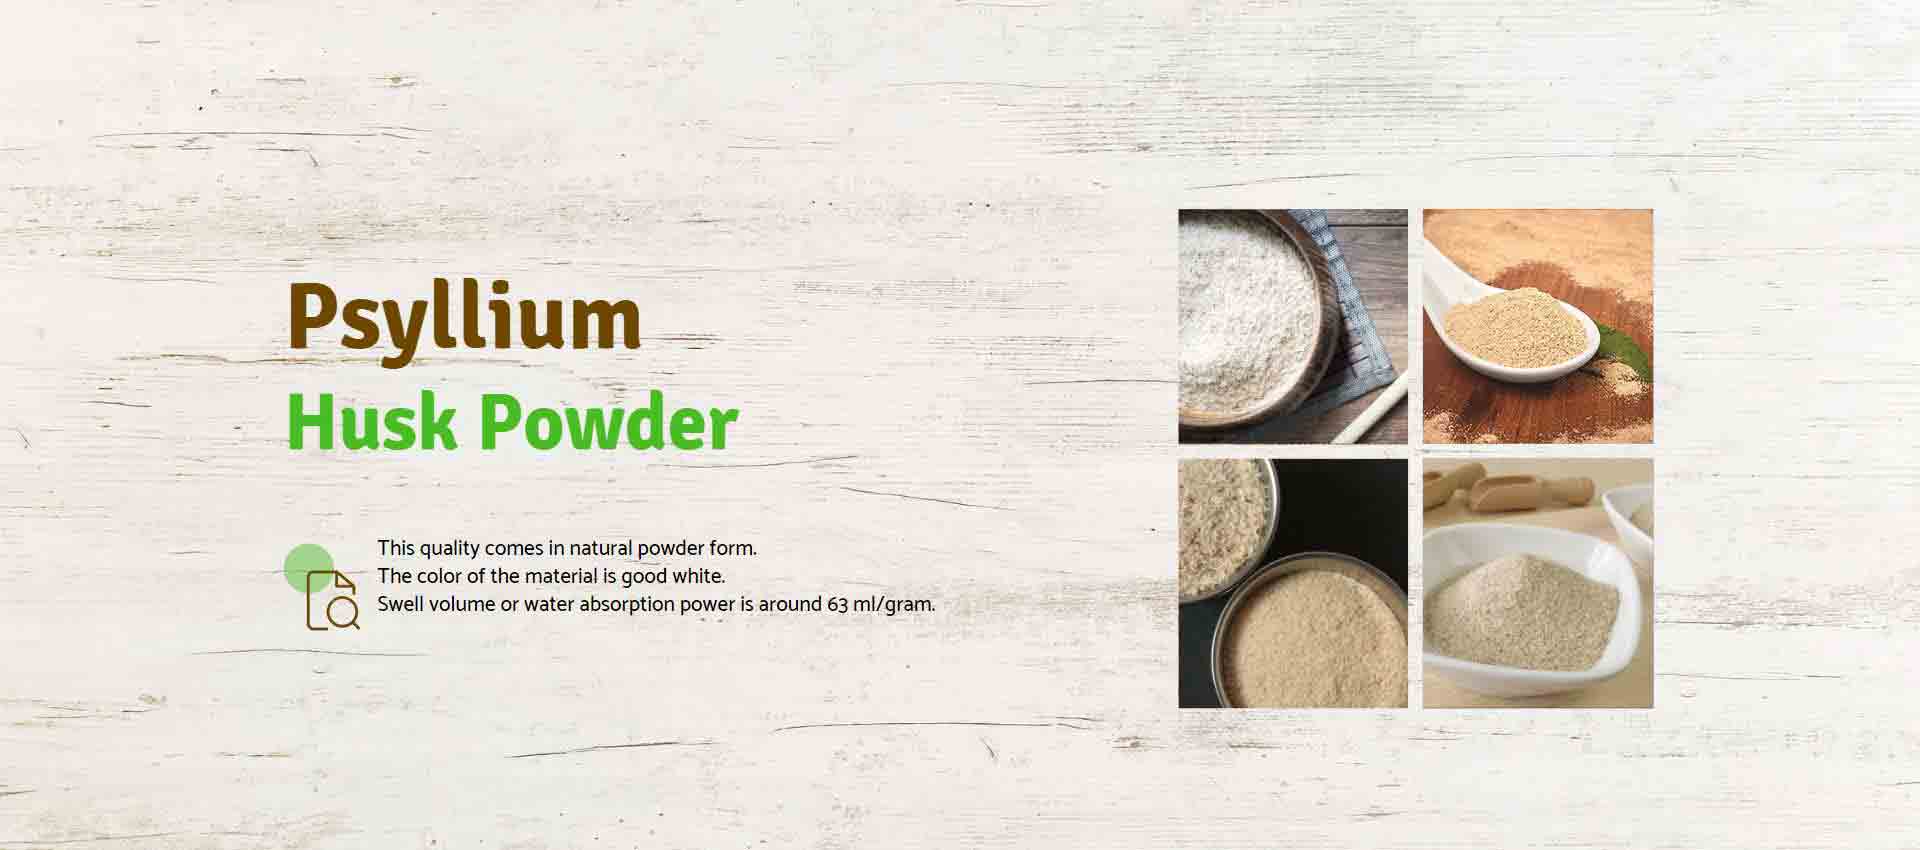 Psyllium Husk Powder Manufacturers in Jordan